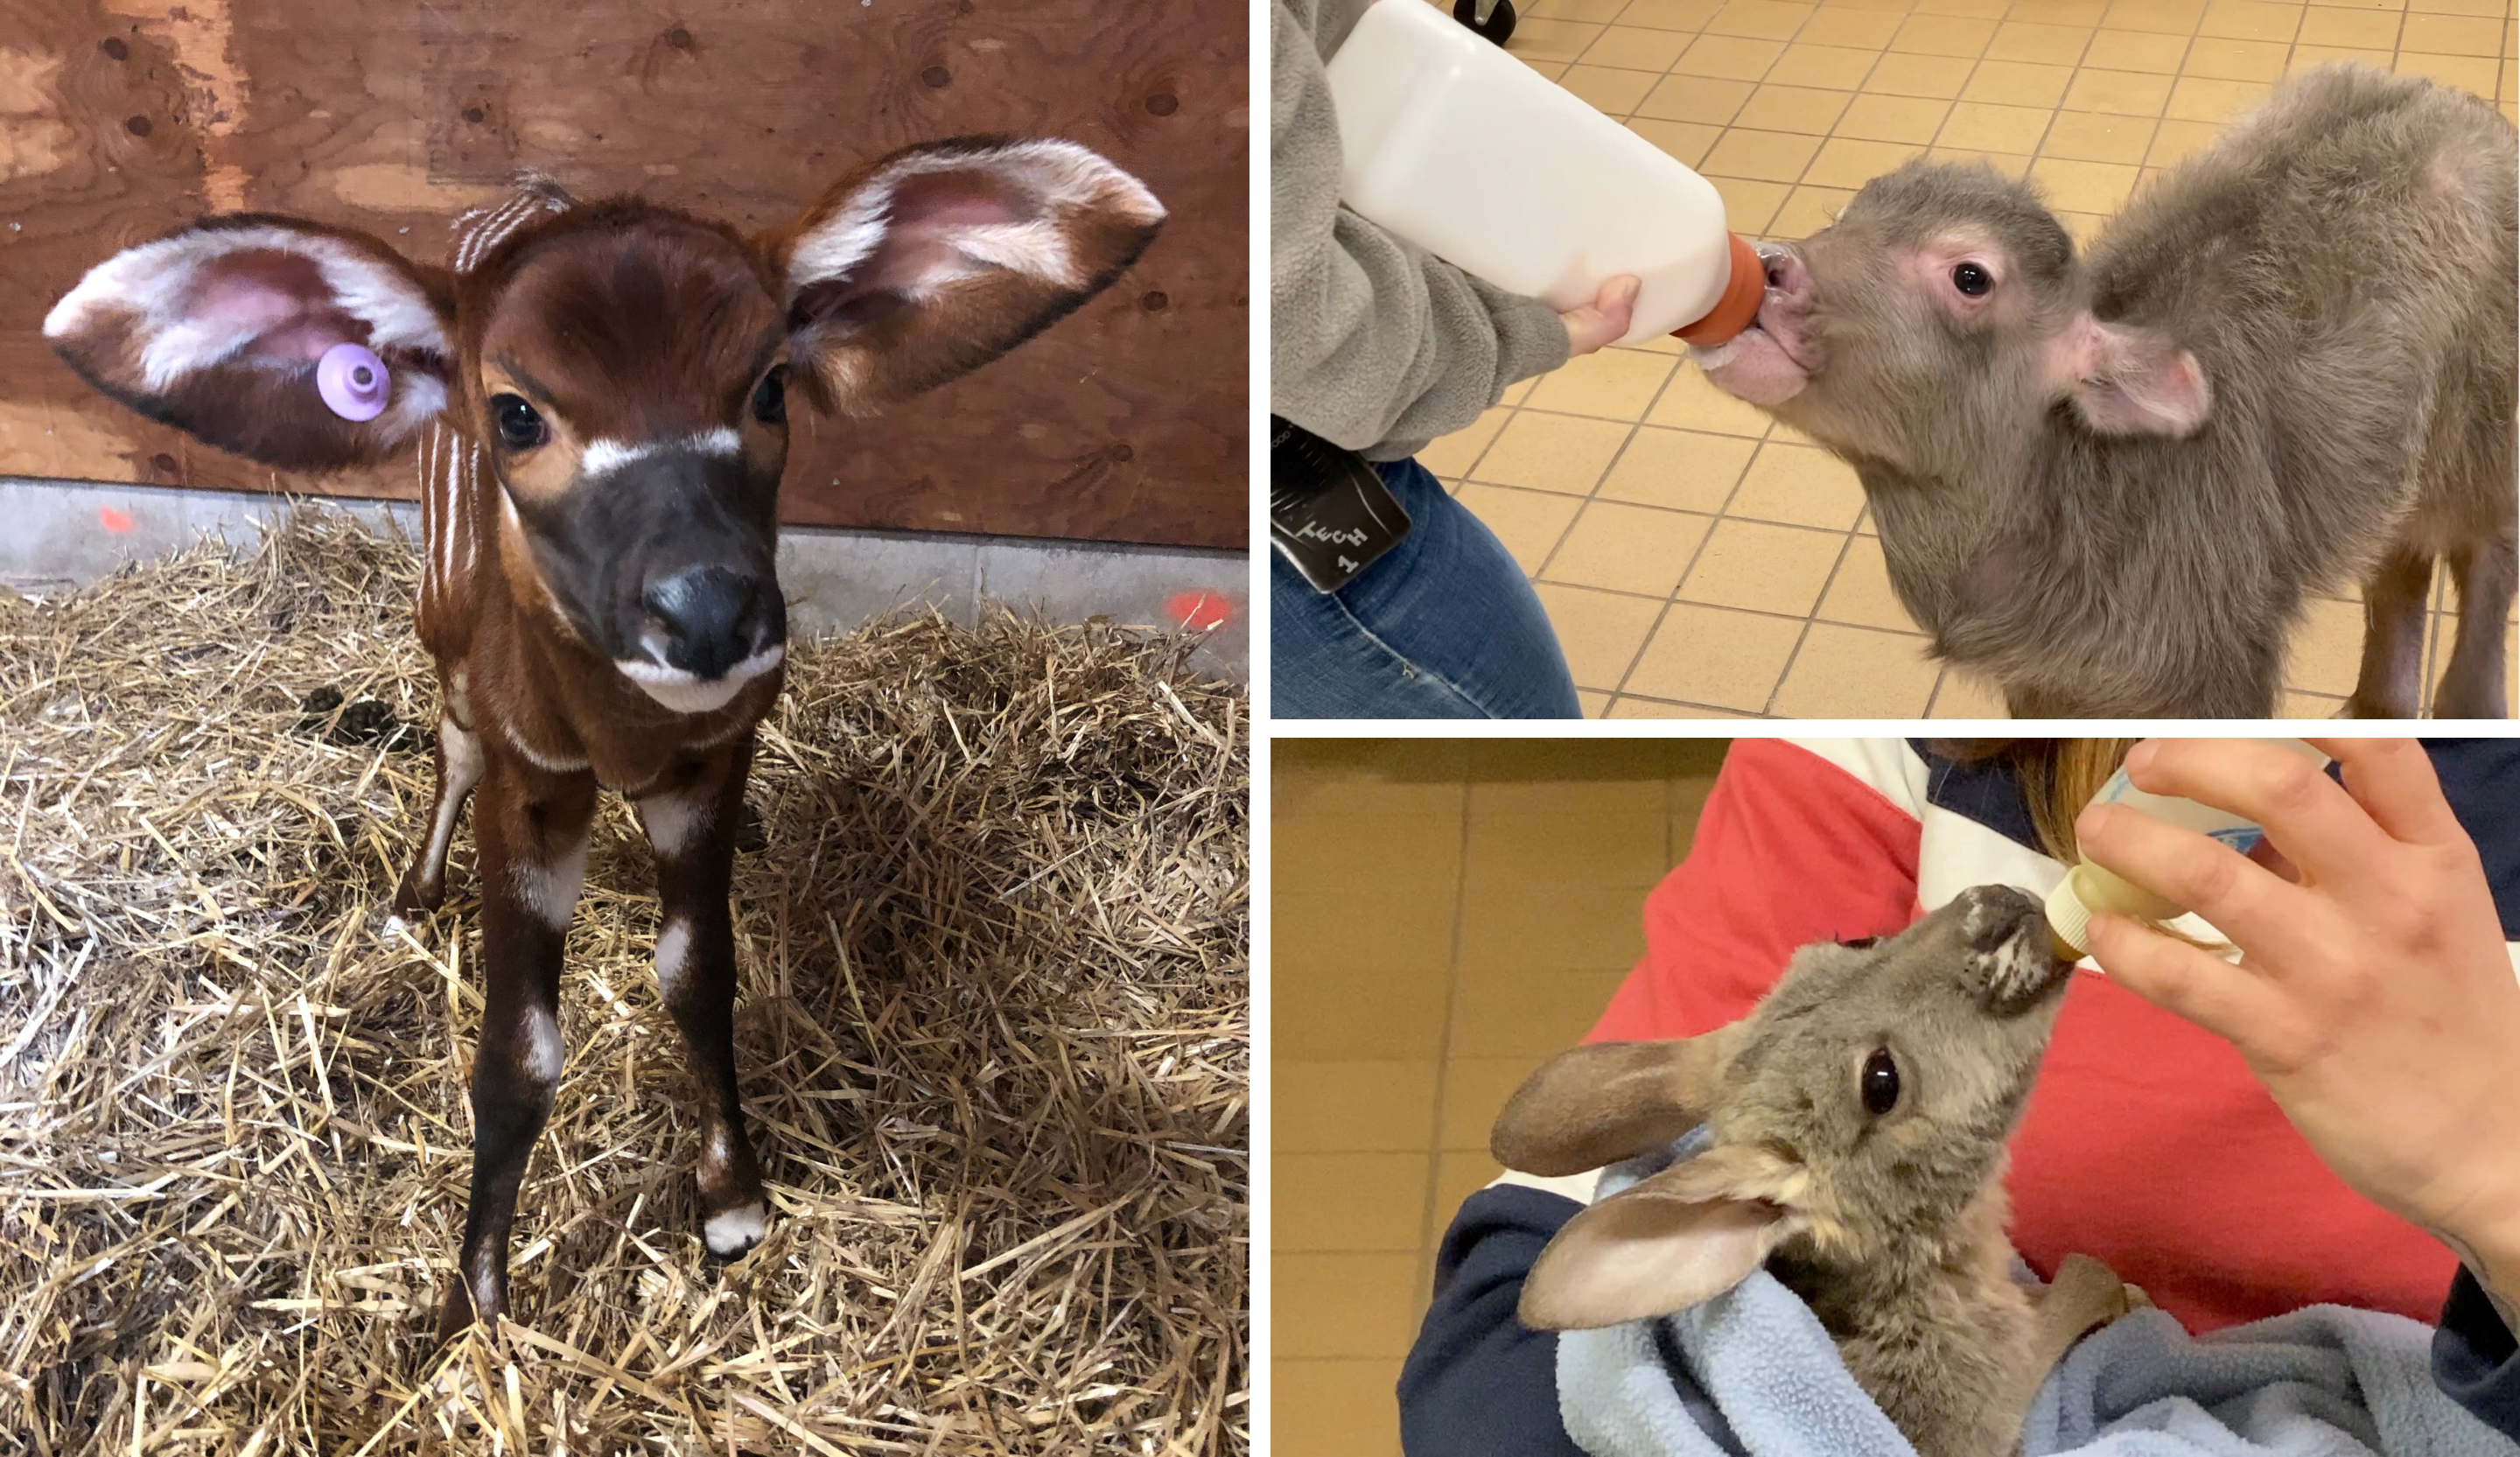 5 Newborn Cubs at Six Flags Wild Safari Are Just Too Cute - NJ Family